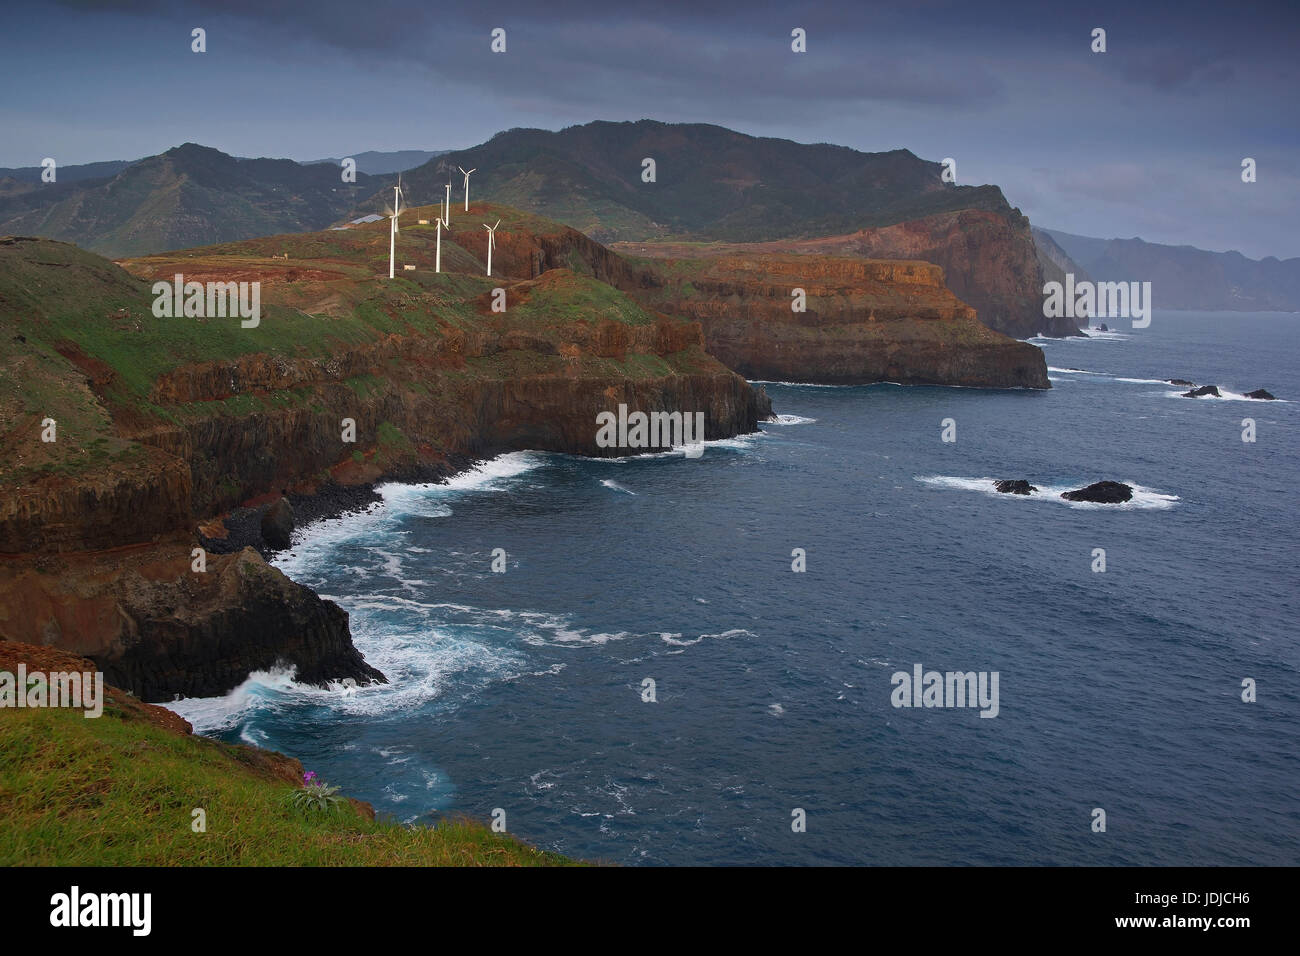 Europe, Portugal, Madeira, the Azores, island group, islands, Ponta de Sao Lourenco, Europa, Azoren, Inselgruppe, Inseln Stock Photo